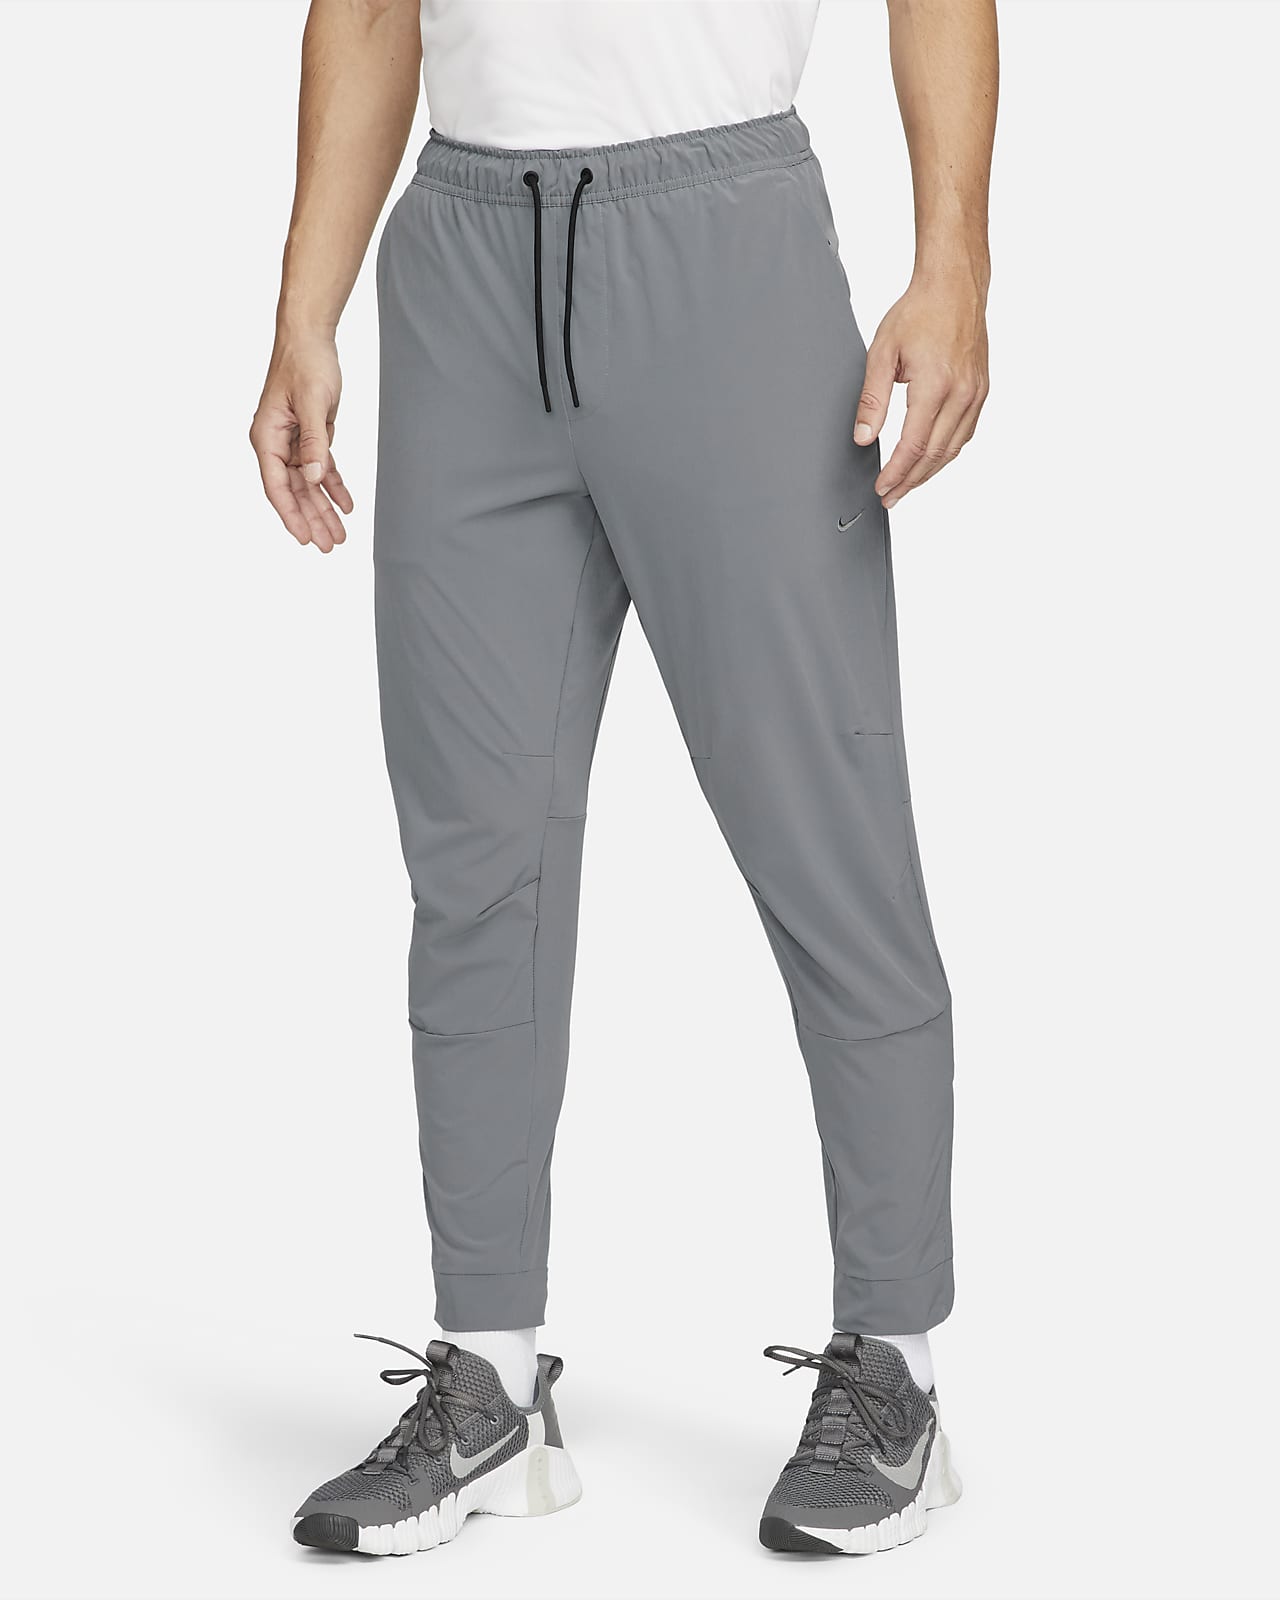 Nike Unlimited Dri-FIT allsidig bukse med glidelås ved ankelen til herre